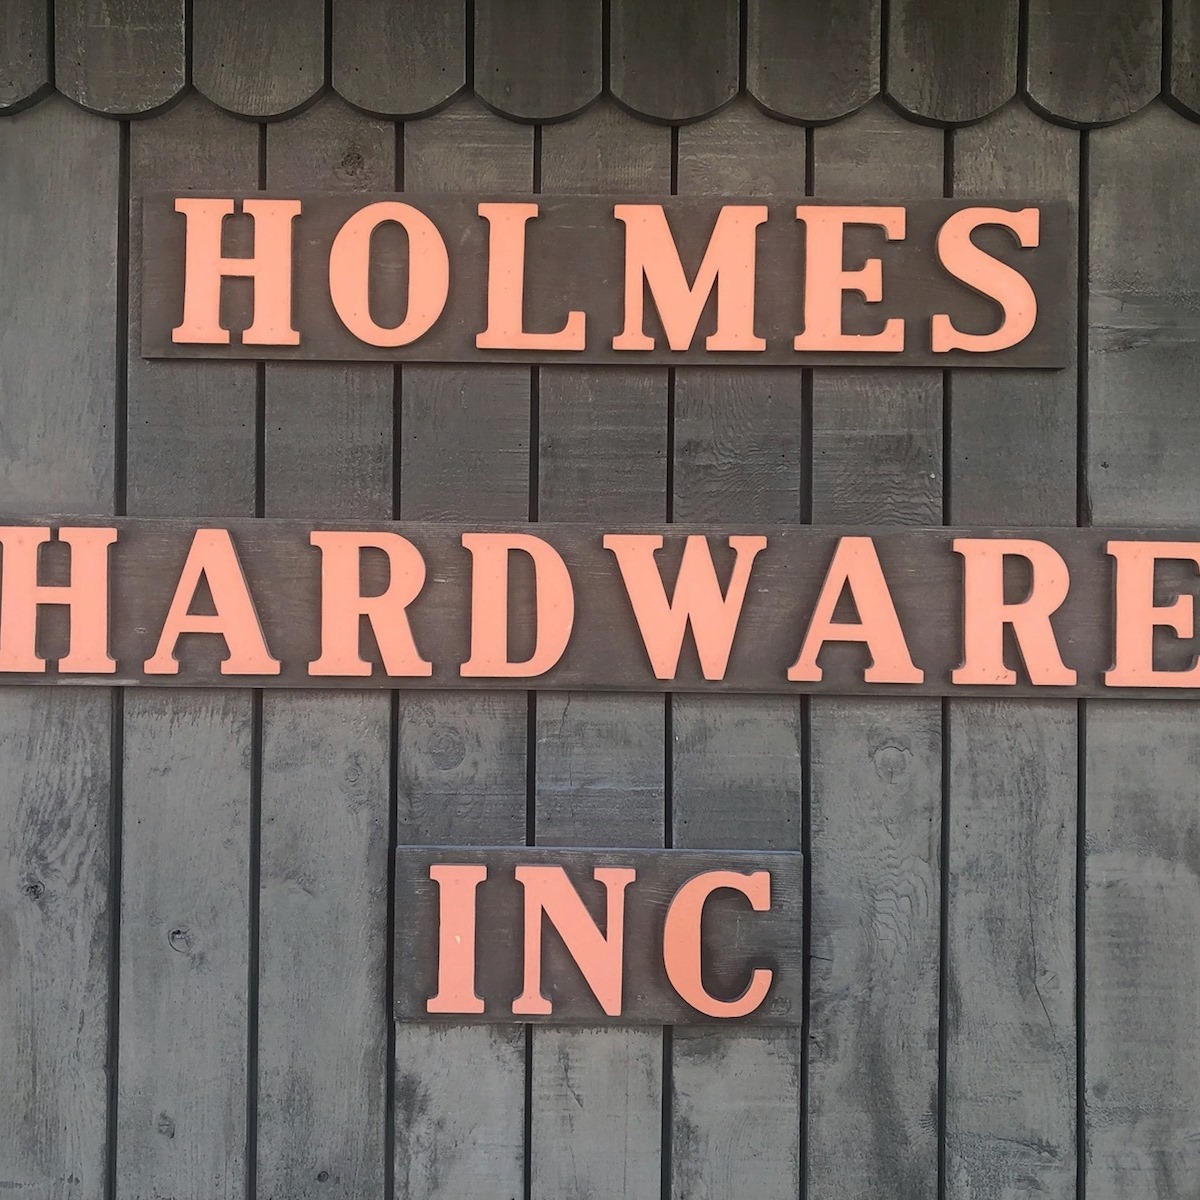 Holmes Hardware